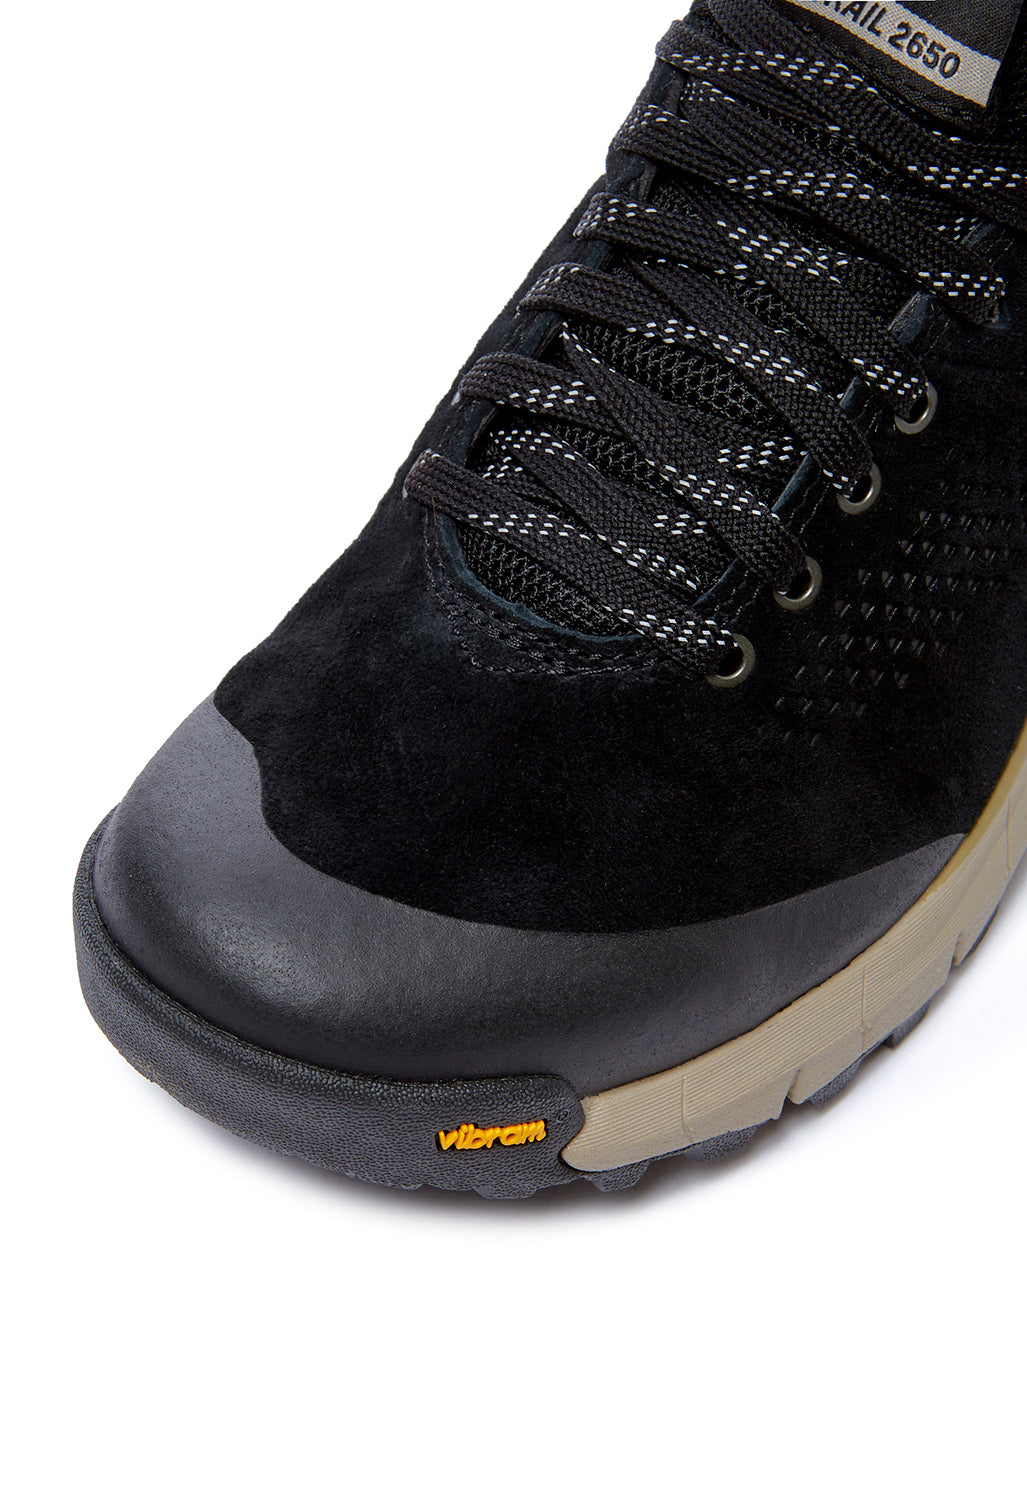 Danner Trail 2650 Mid GORE-TEX Women's Boots - Black/Khaki